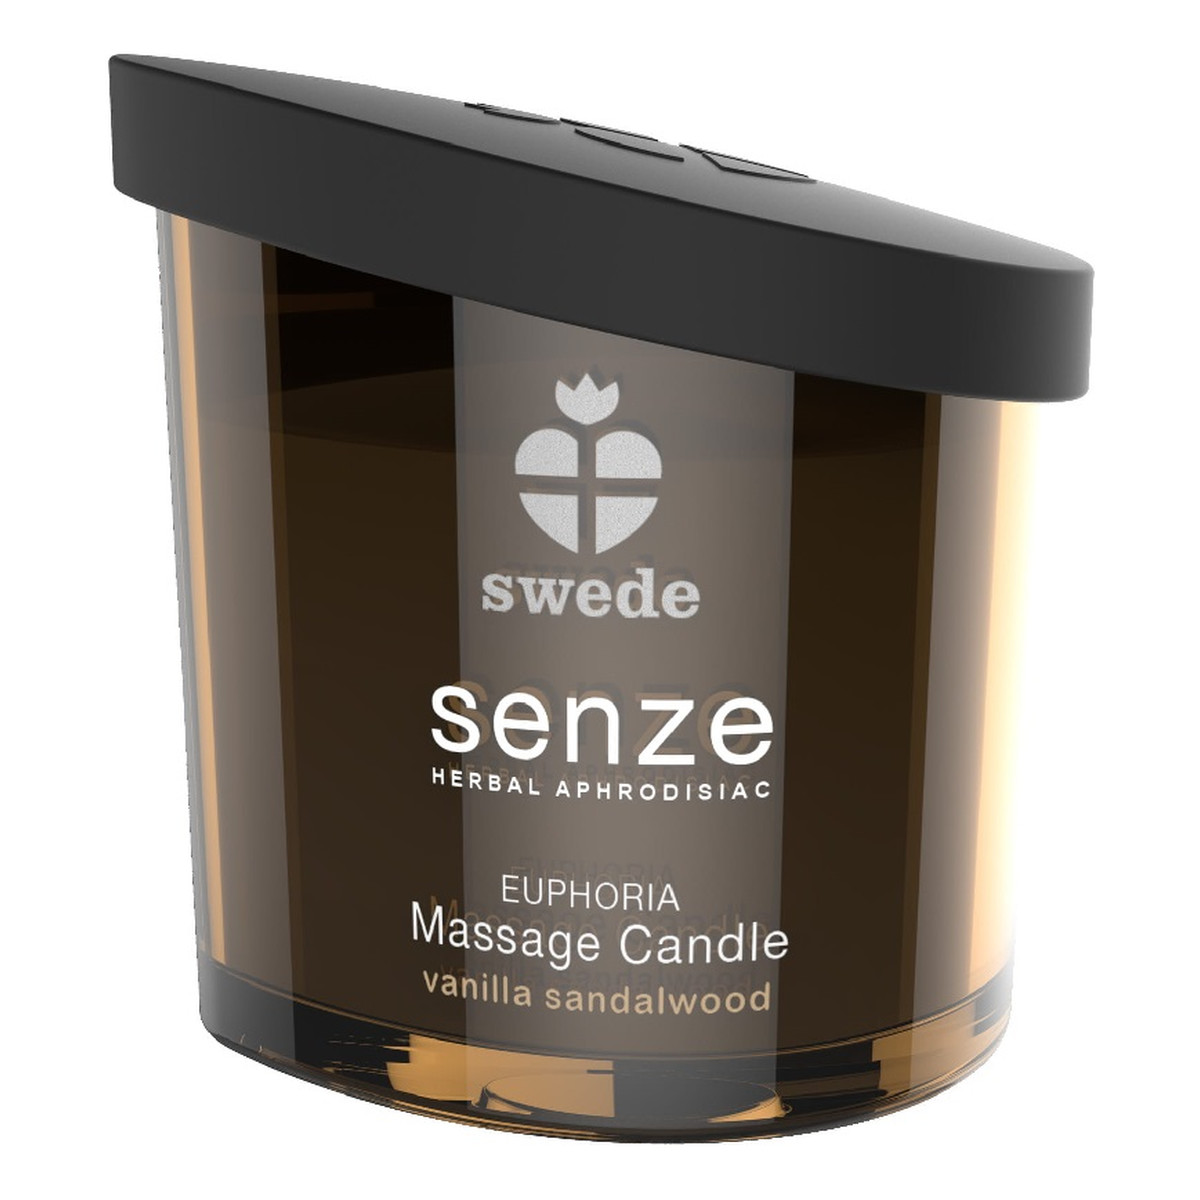 Swede Senze massage candle świeca do masażu euphoria 50ml